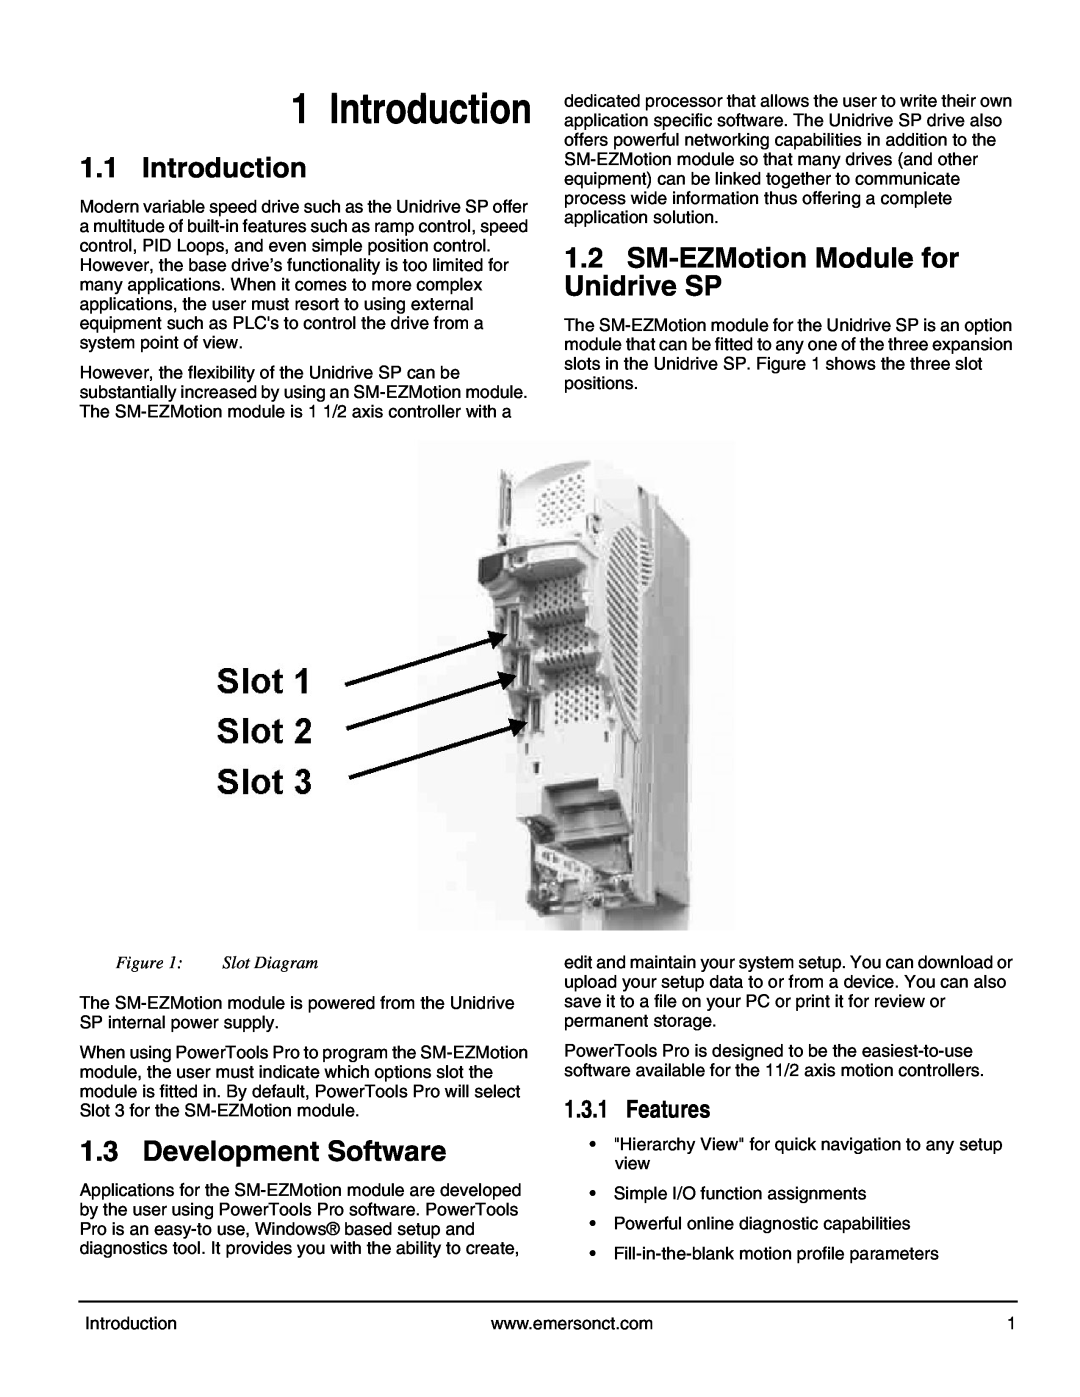 Emerson P/N 400361-00 manual Introduction, Development Software, SM-EZMotion Module for Unidrive SP, Features 